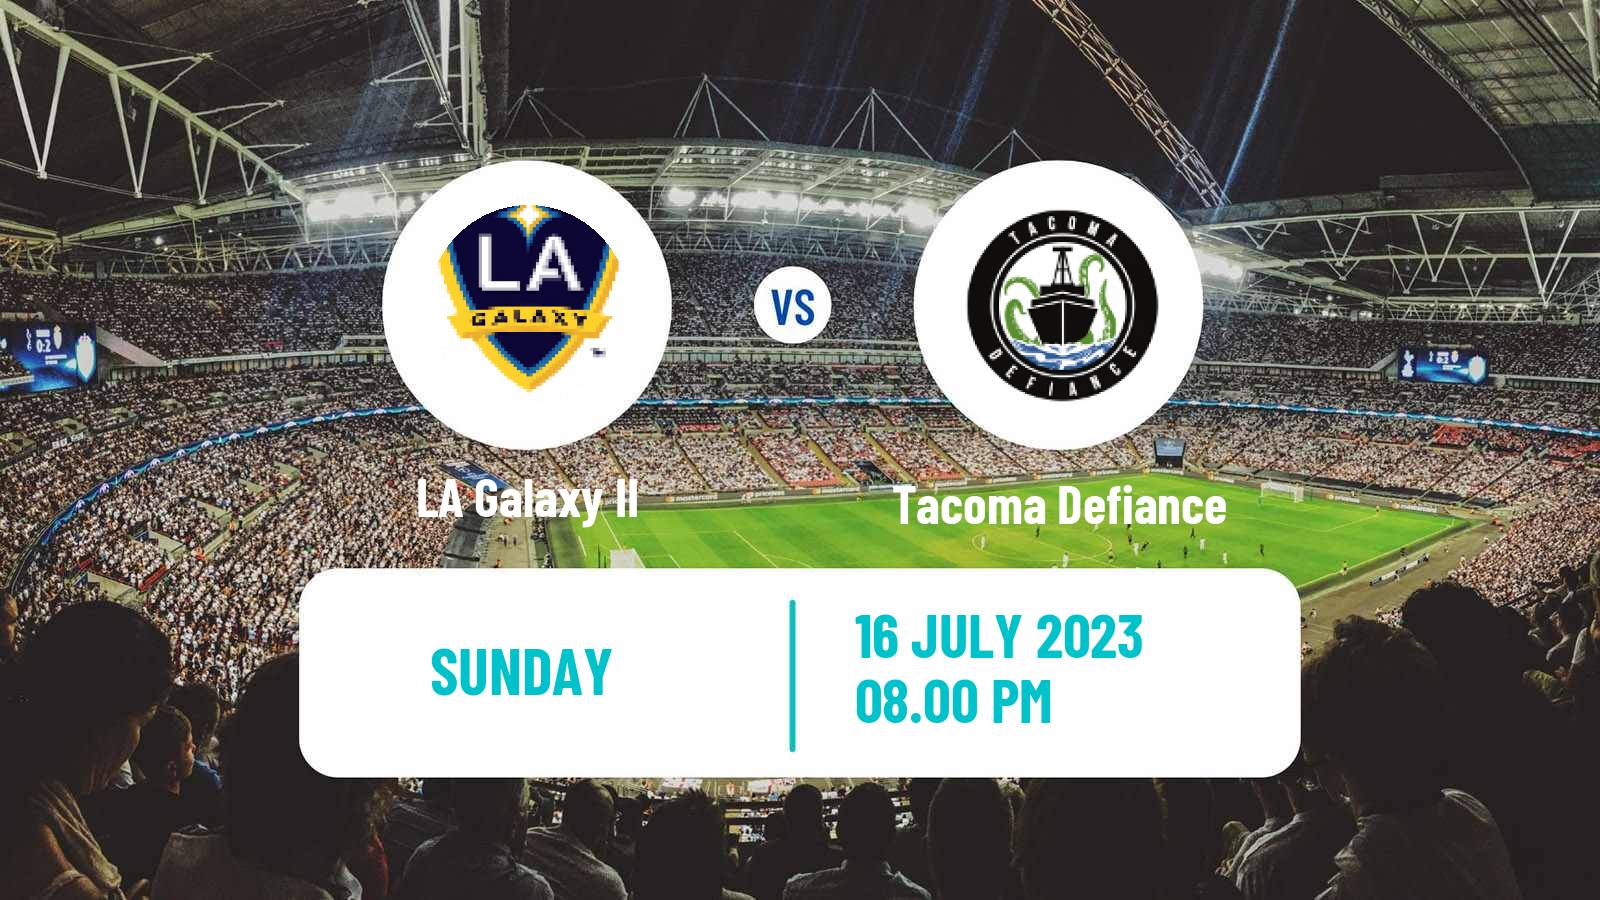 Soccer MLS Next Pro LA Galaxy II - Tacoma Defiance